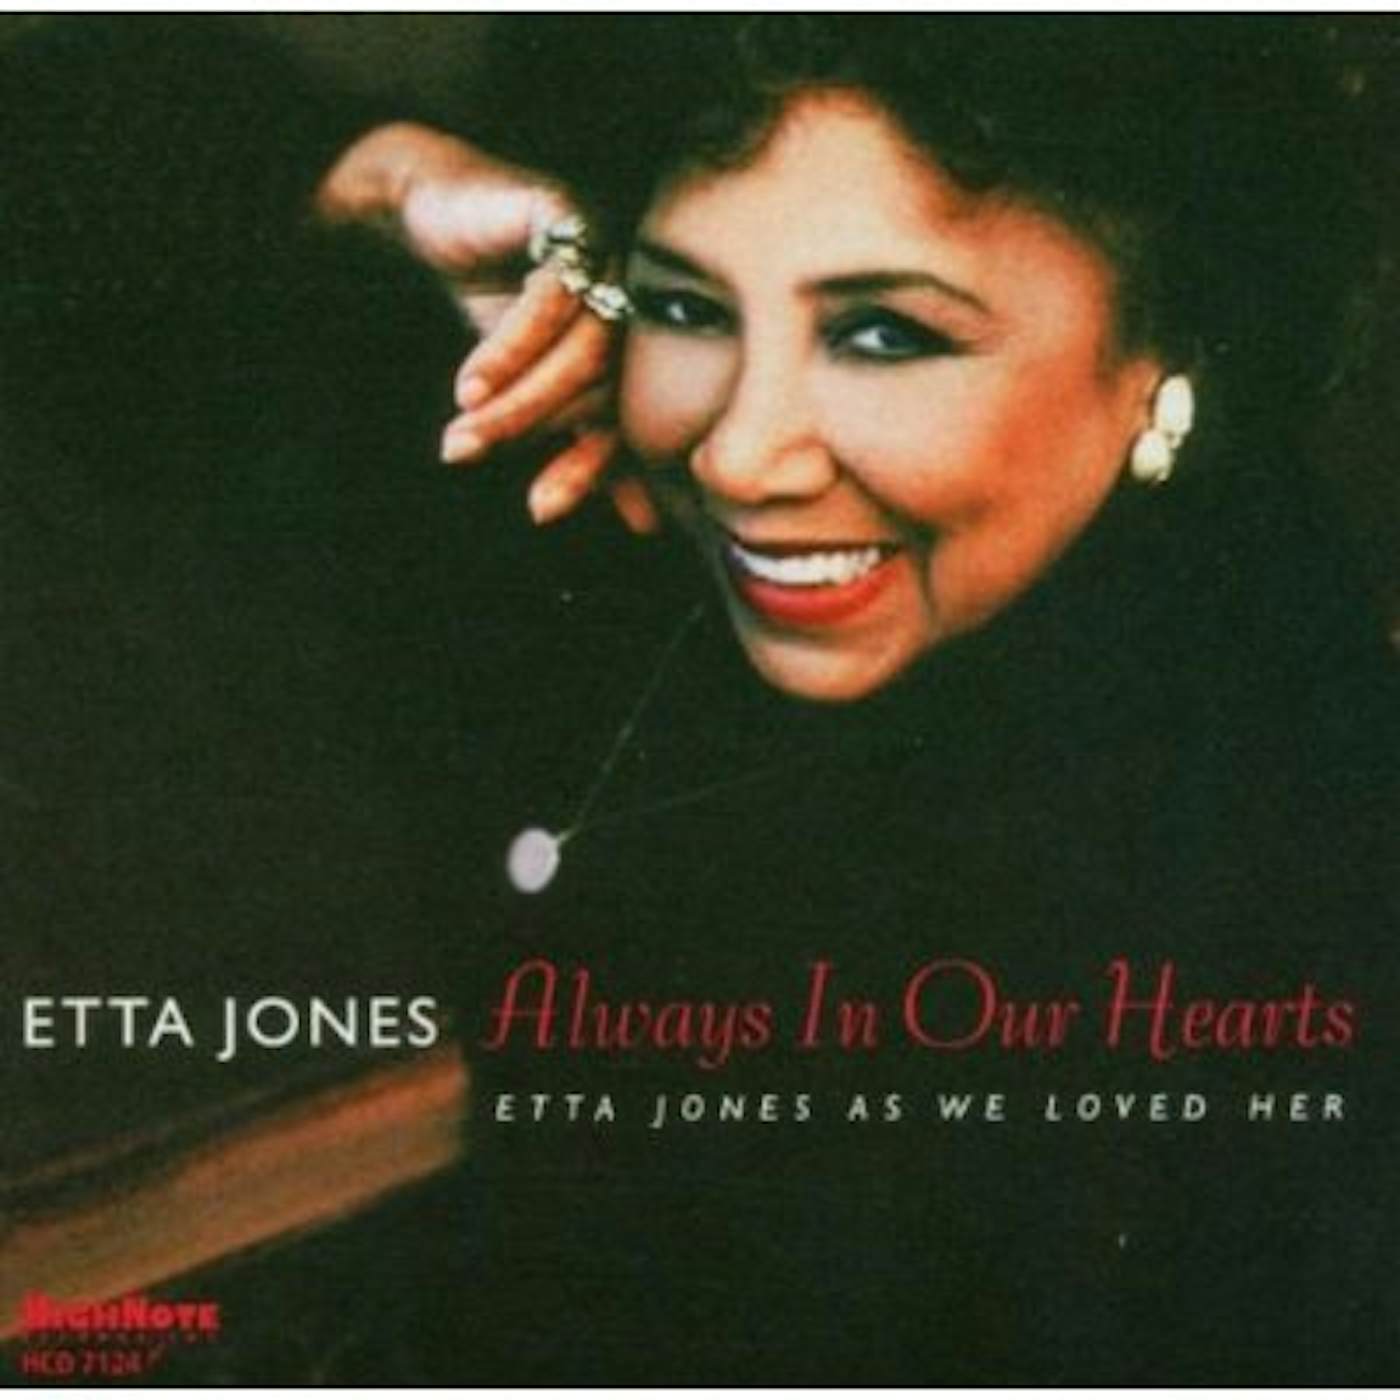 ALWAYS IN OUR HEARTS: ETTA JONES AS WE LOVED HER CD